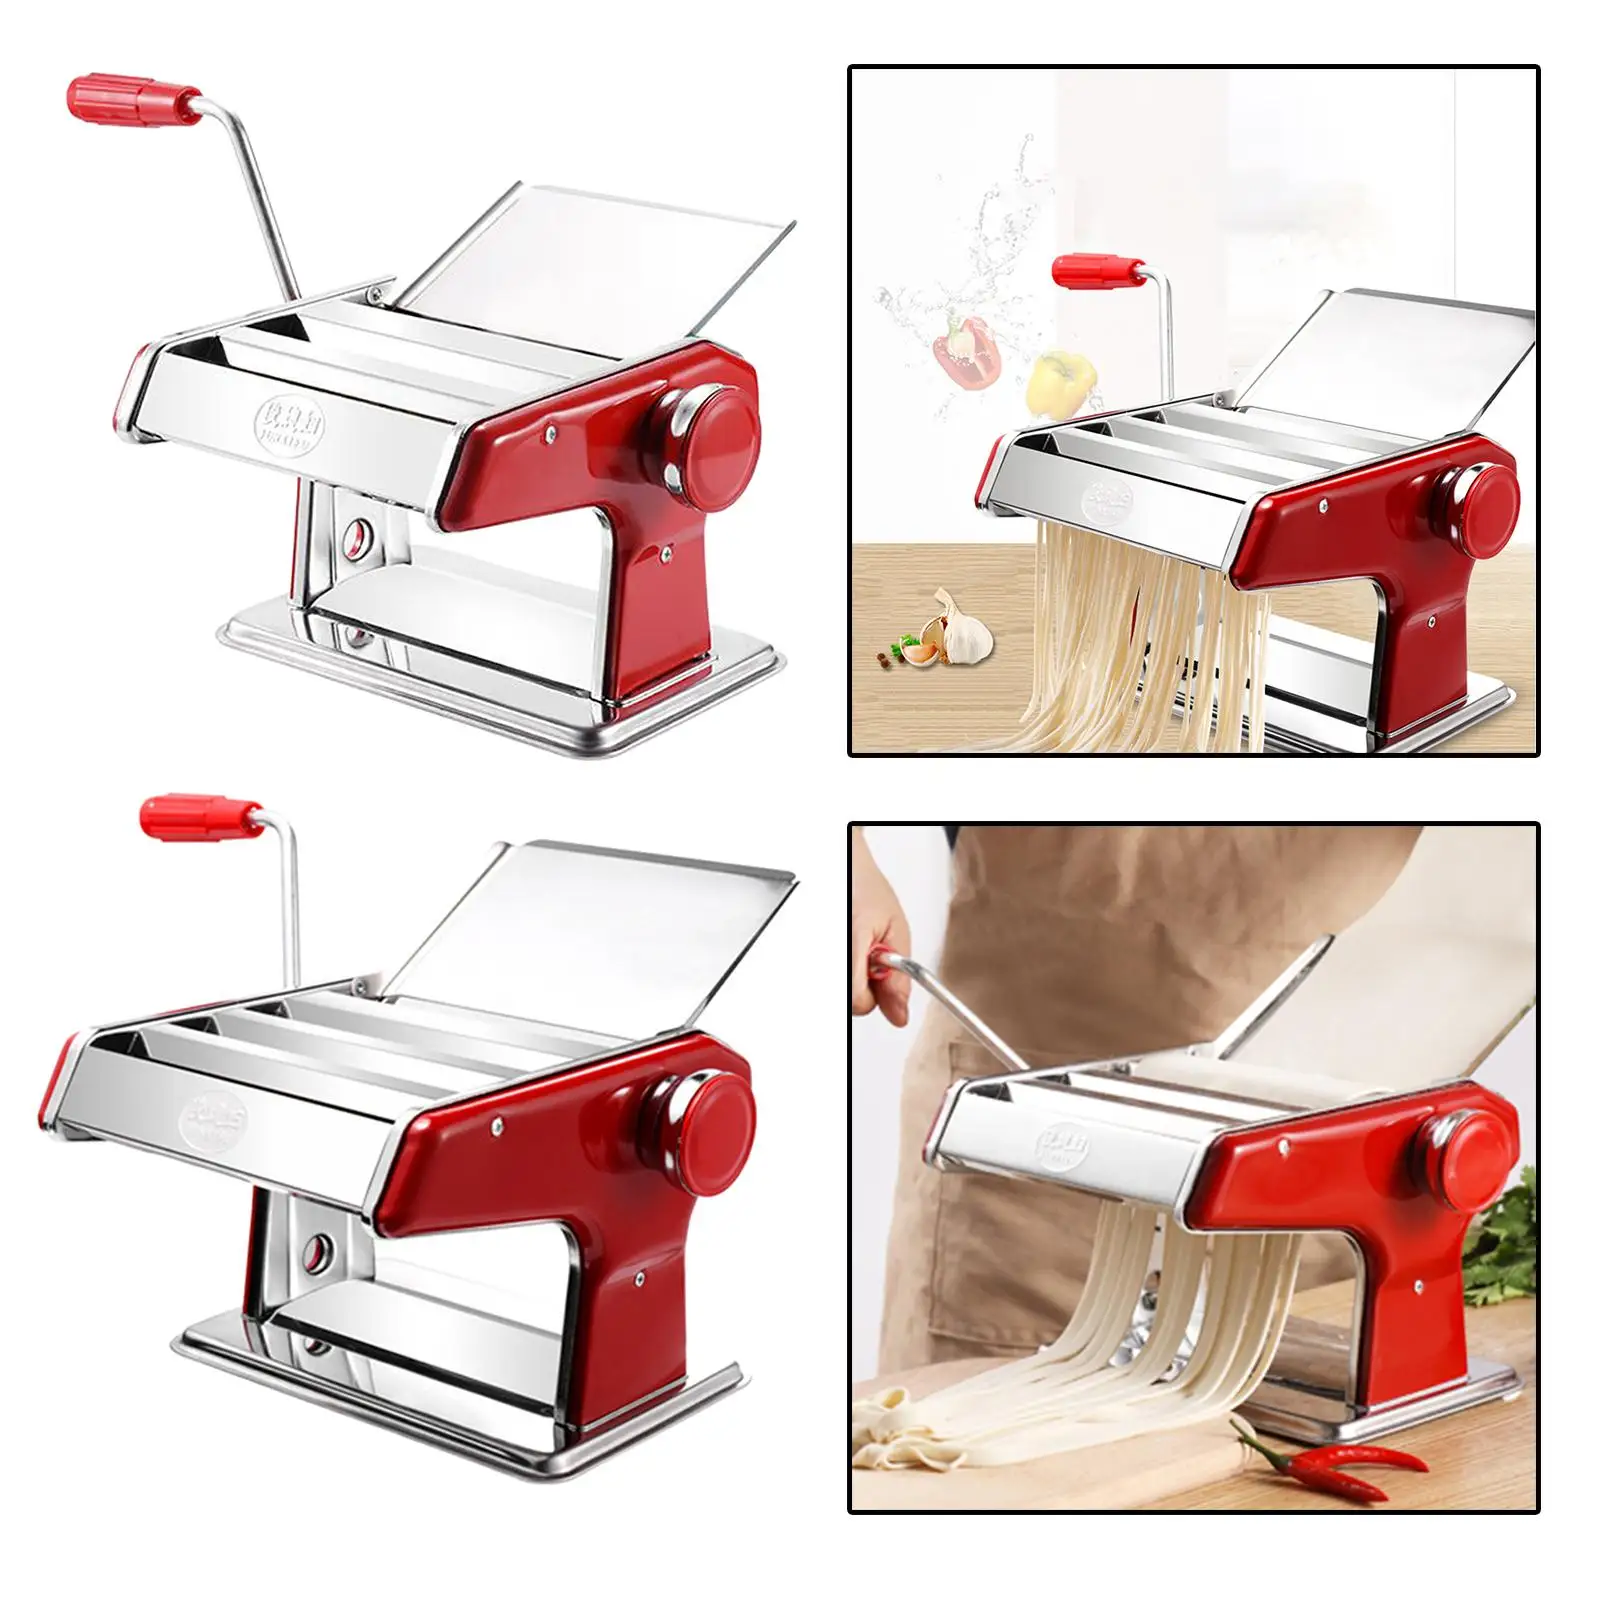 Stainless Steel Pasta Maker Machine Kitchen Accessories for Dumpling Lasagna